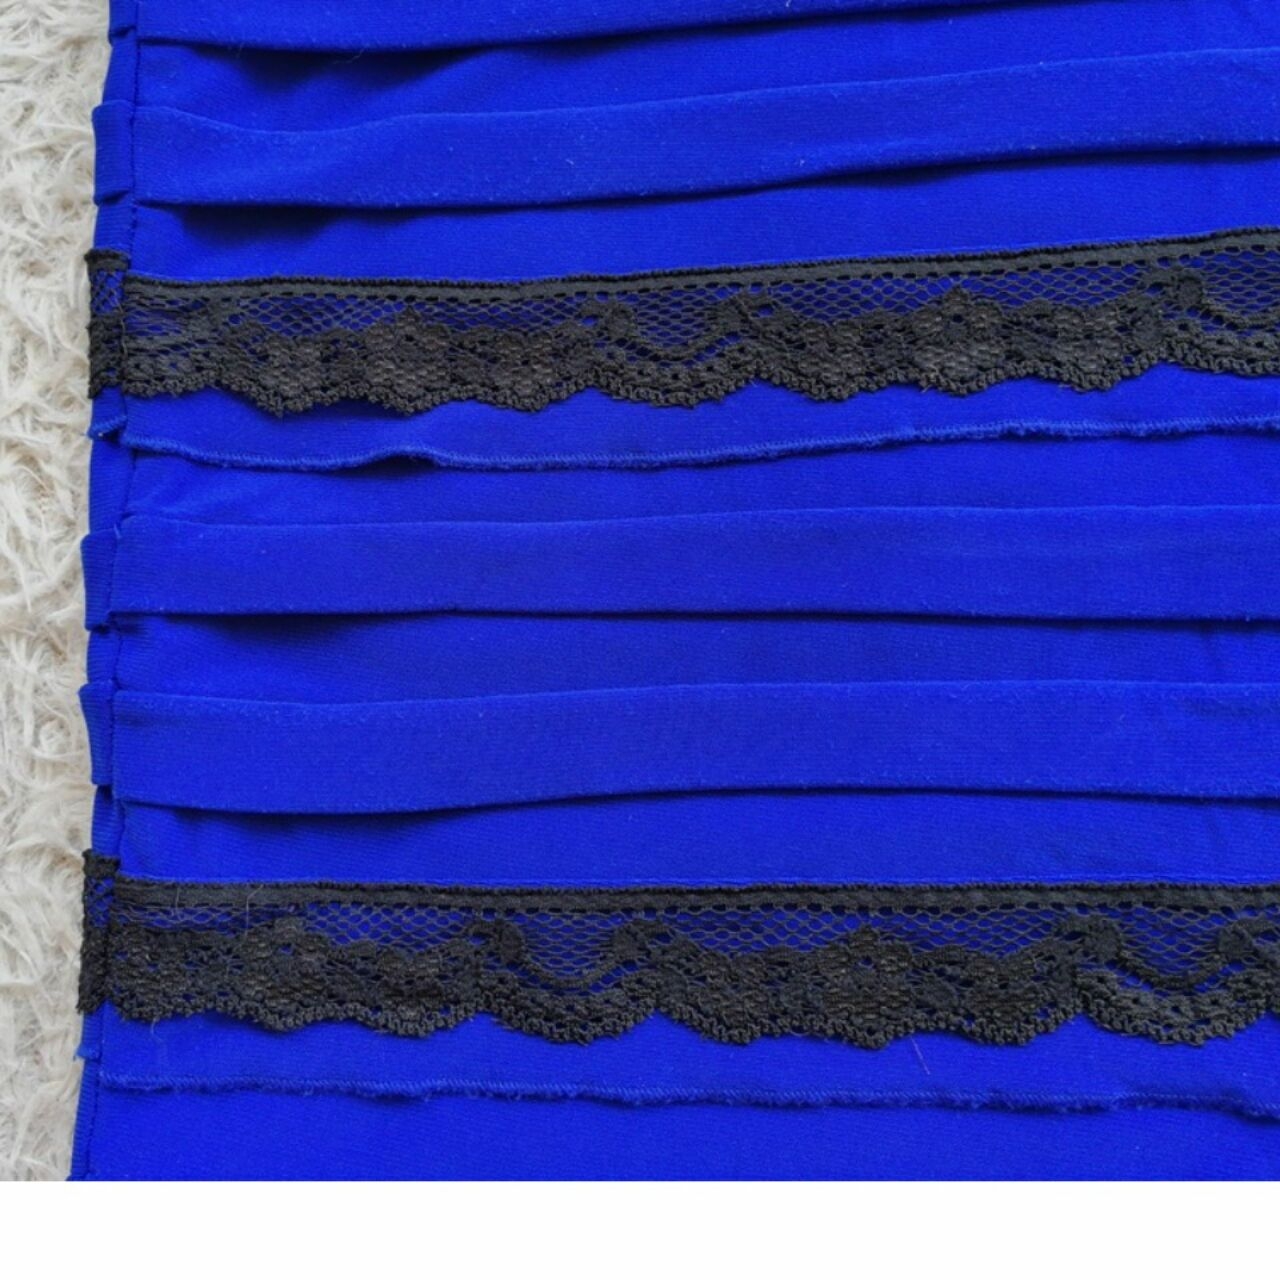 Adrianna Papell Blue & Black Midi Dress